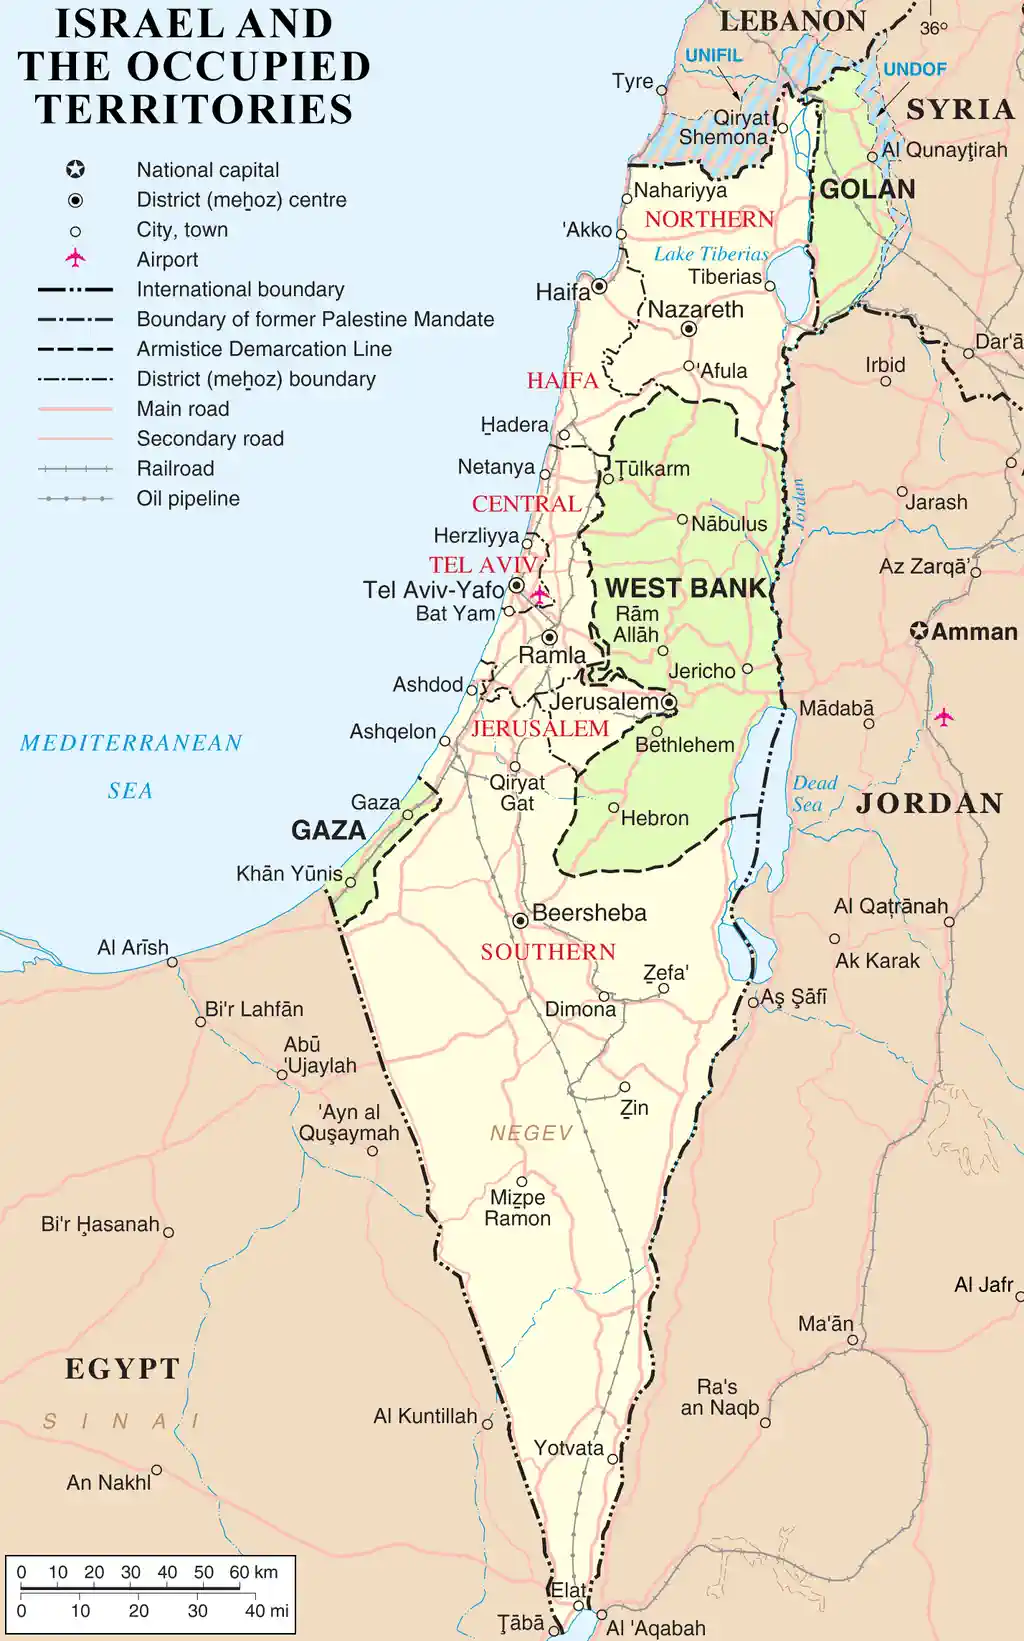 Carte des territoires occupés en Israel